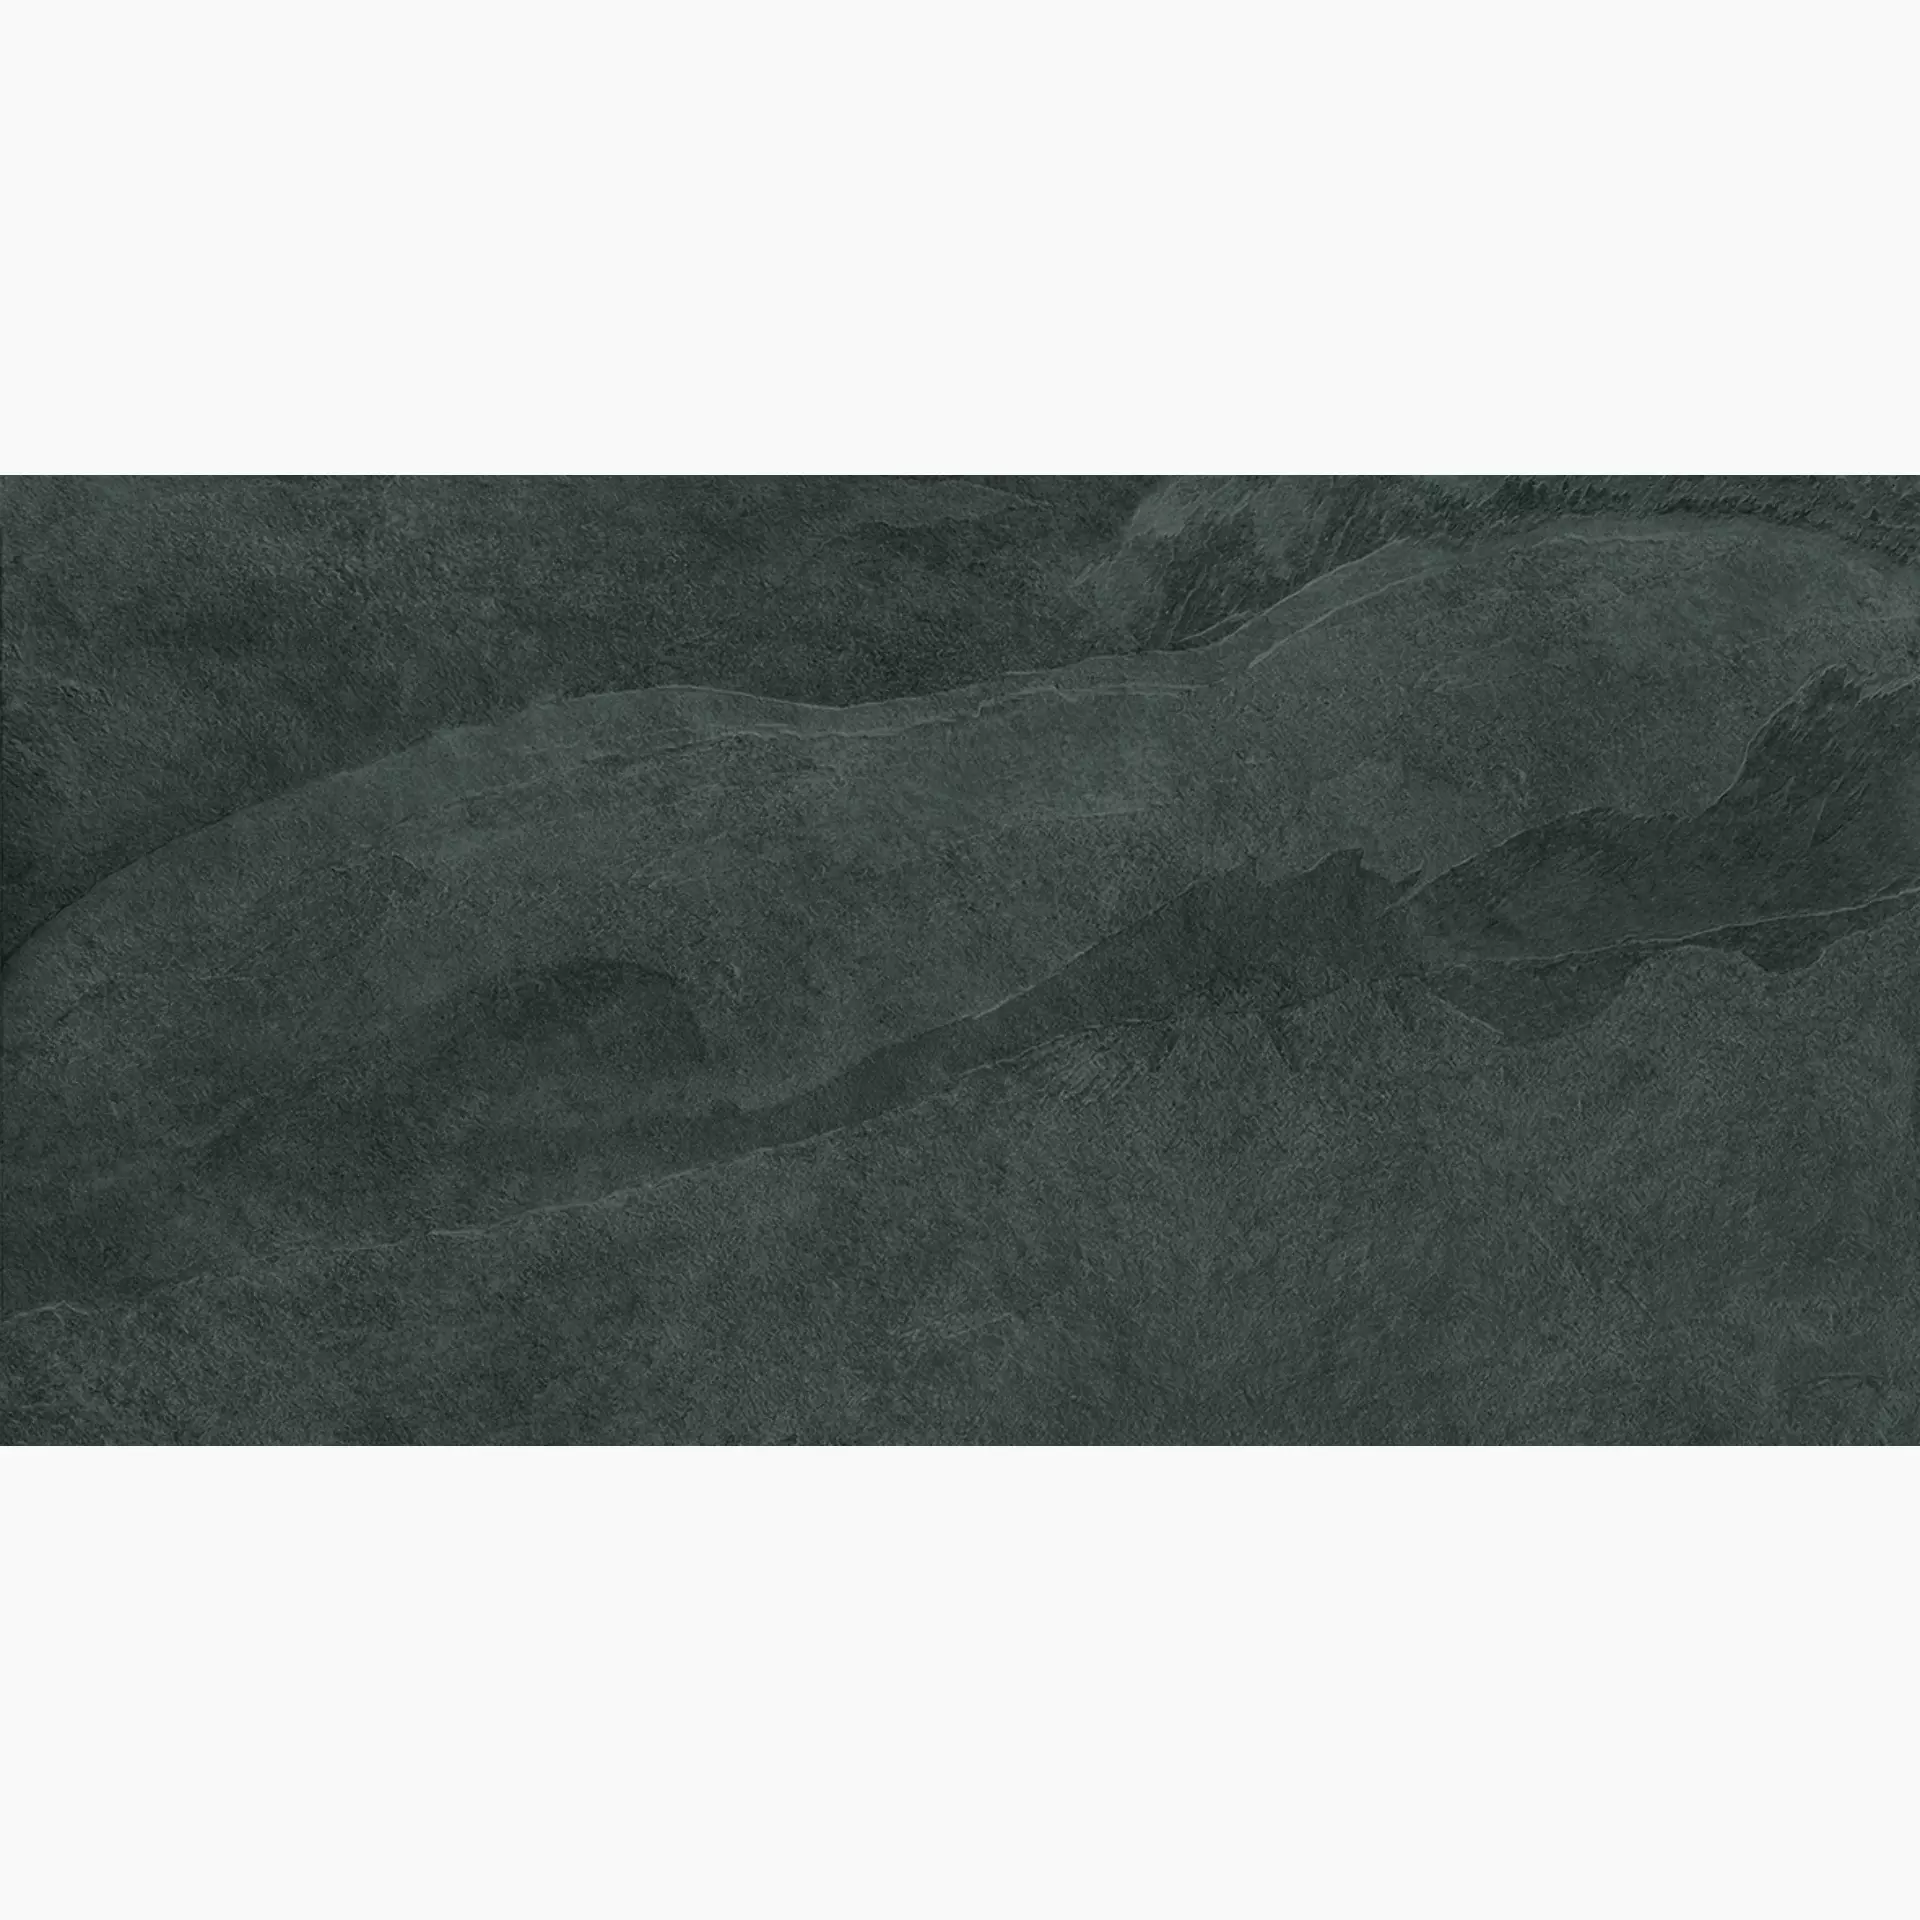 Ergon Cornerstone Slate Black Naturale E7KY 60x120cm rectified 9,5mm